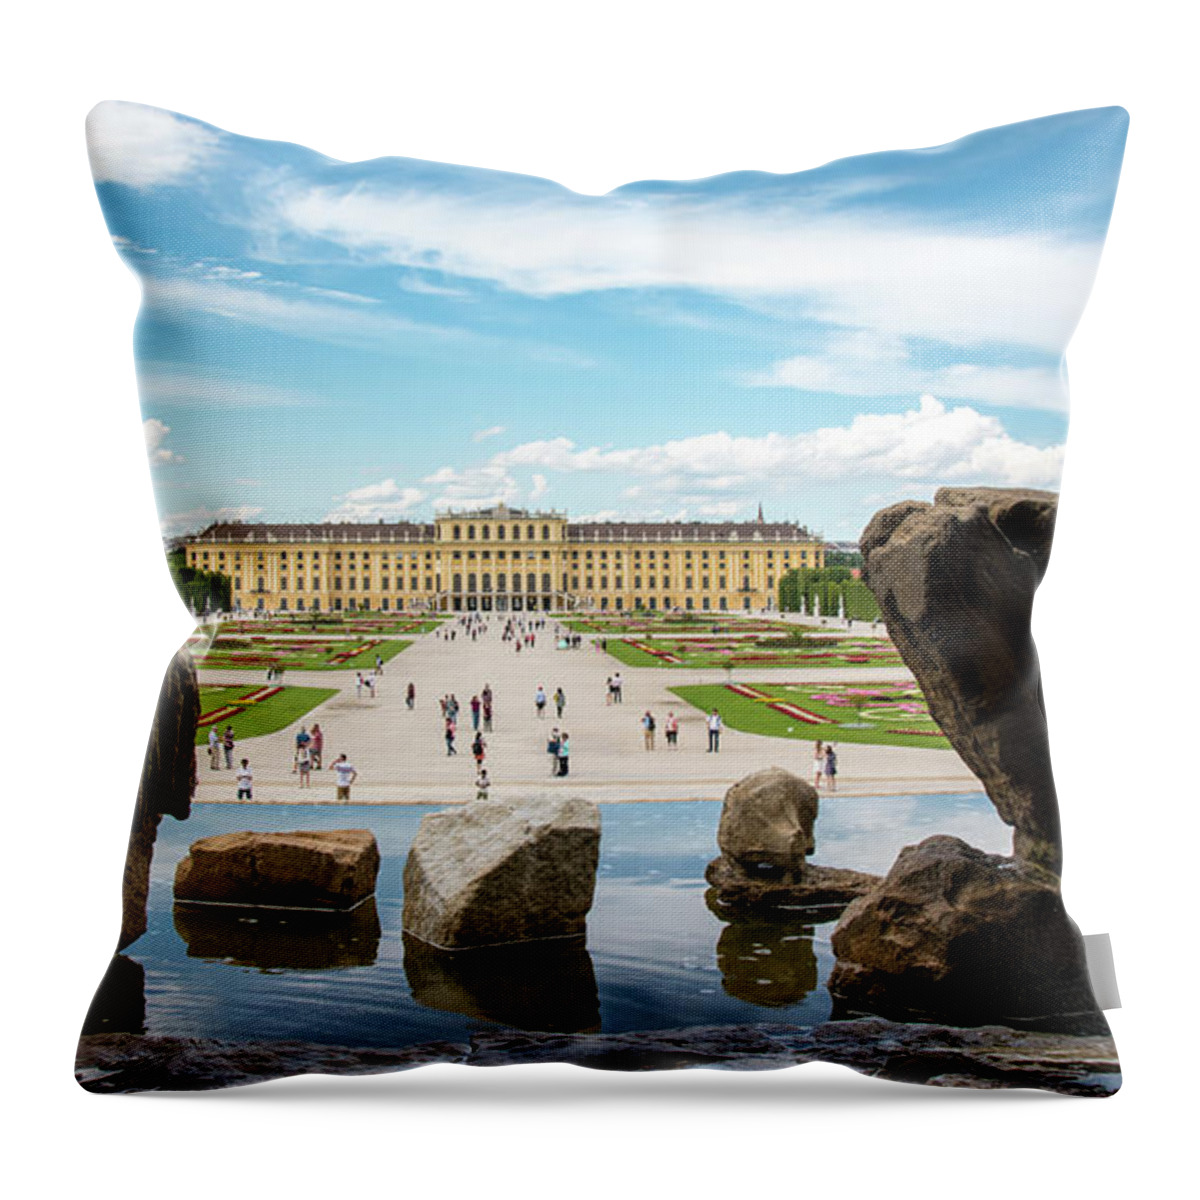 Schonbrunn Palace Throw Pillow featuring the photograph Schonbrunn Palace through the Rocks and Fountain by Matthew DeGrushe